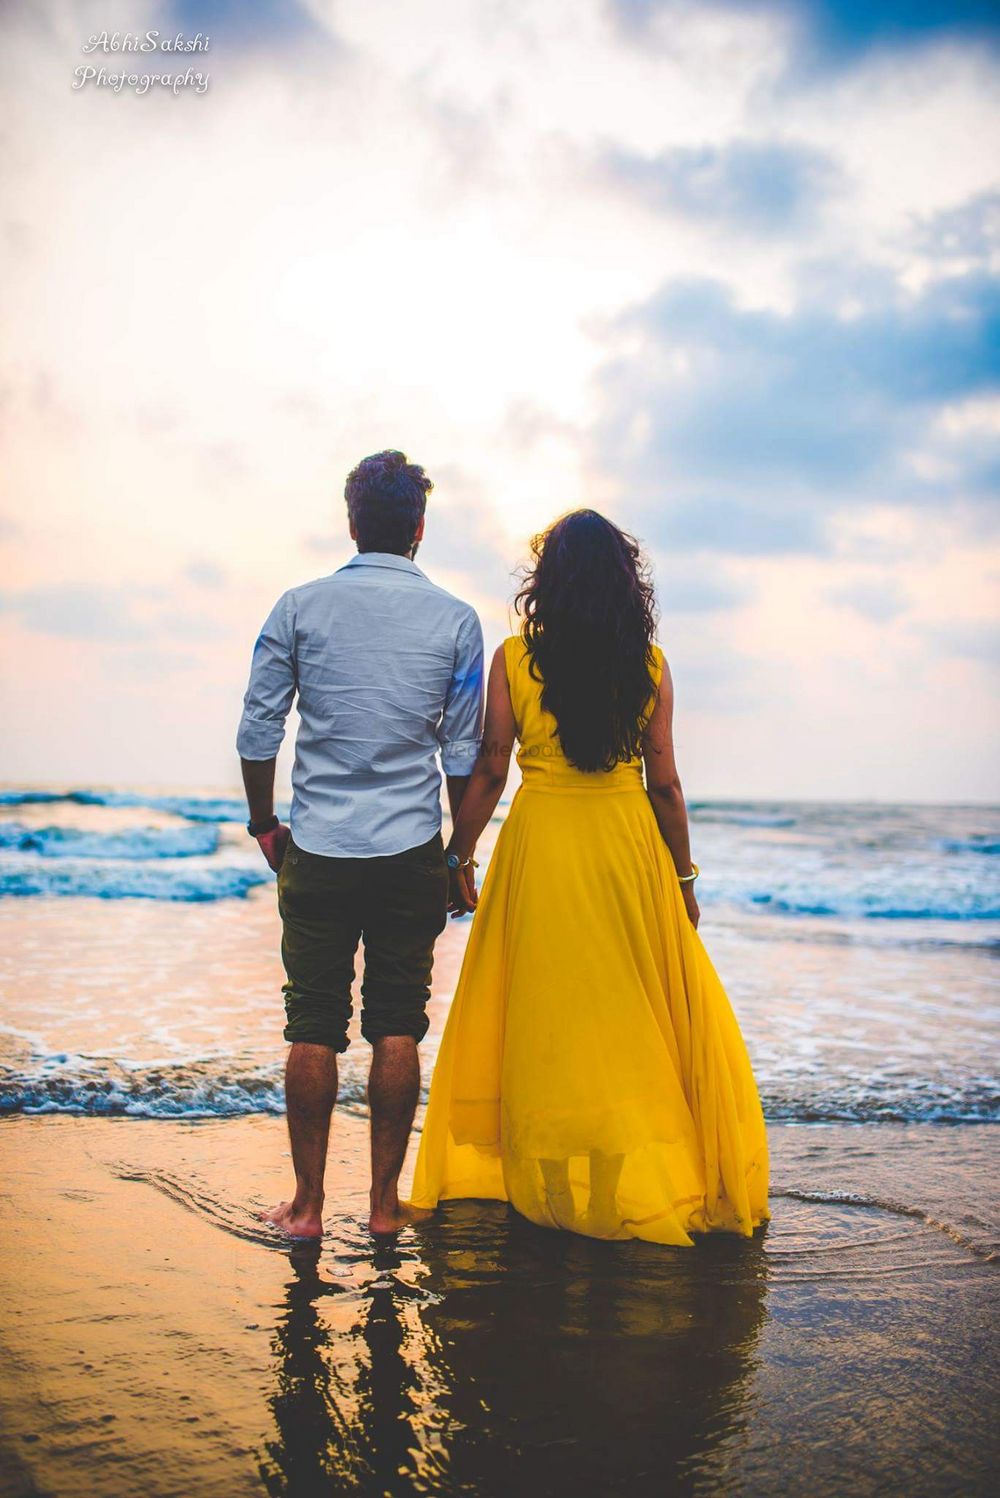 Photo of Pre wedding or honeymoon photo on the beach